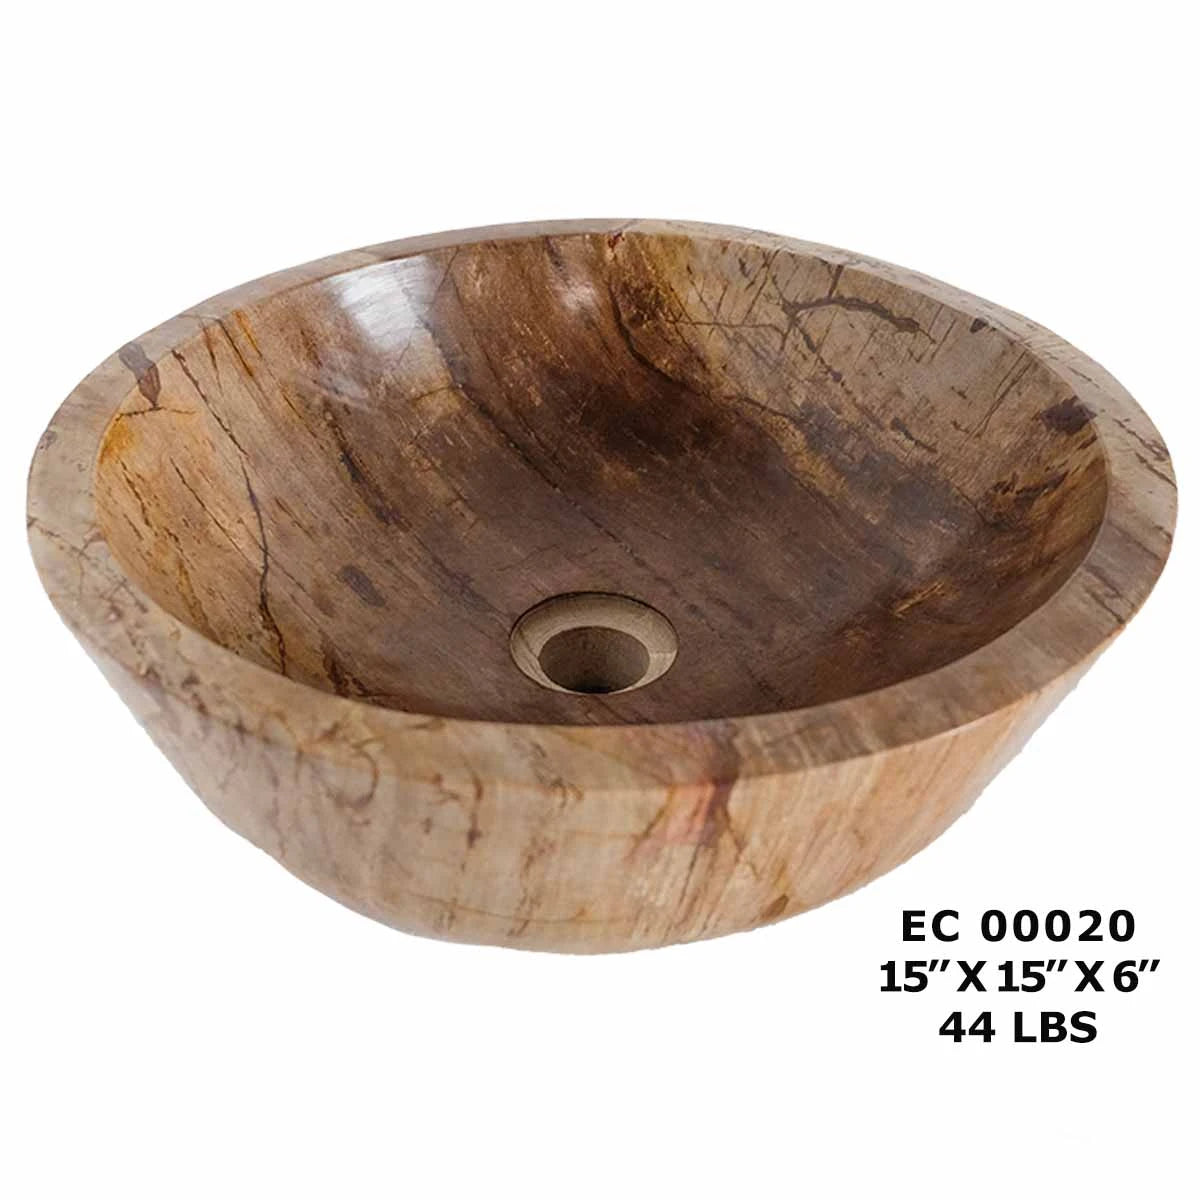 Petrified Wood Kitchen Sink, Modern Bathroom Vanity EC00020